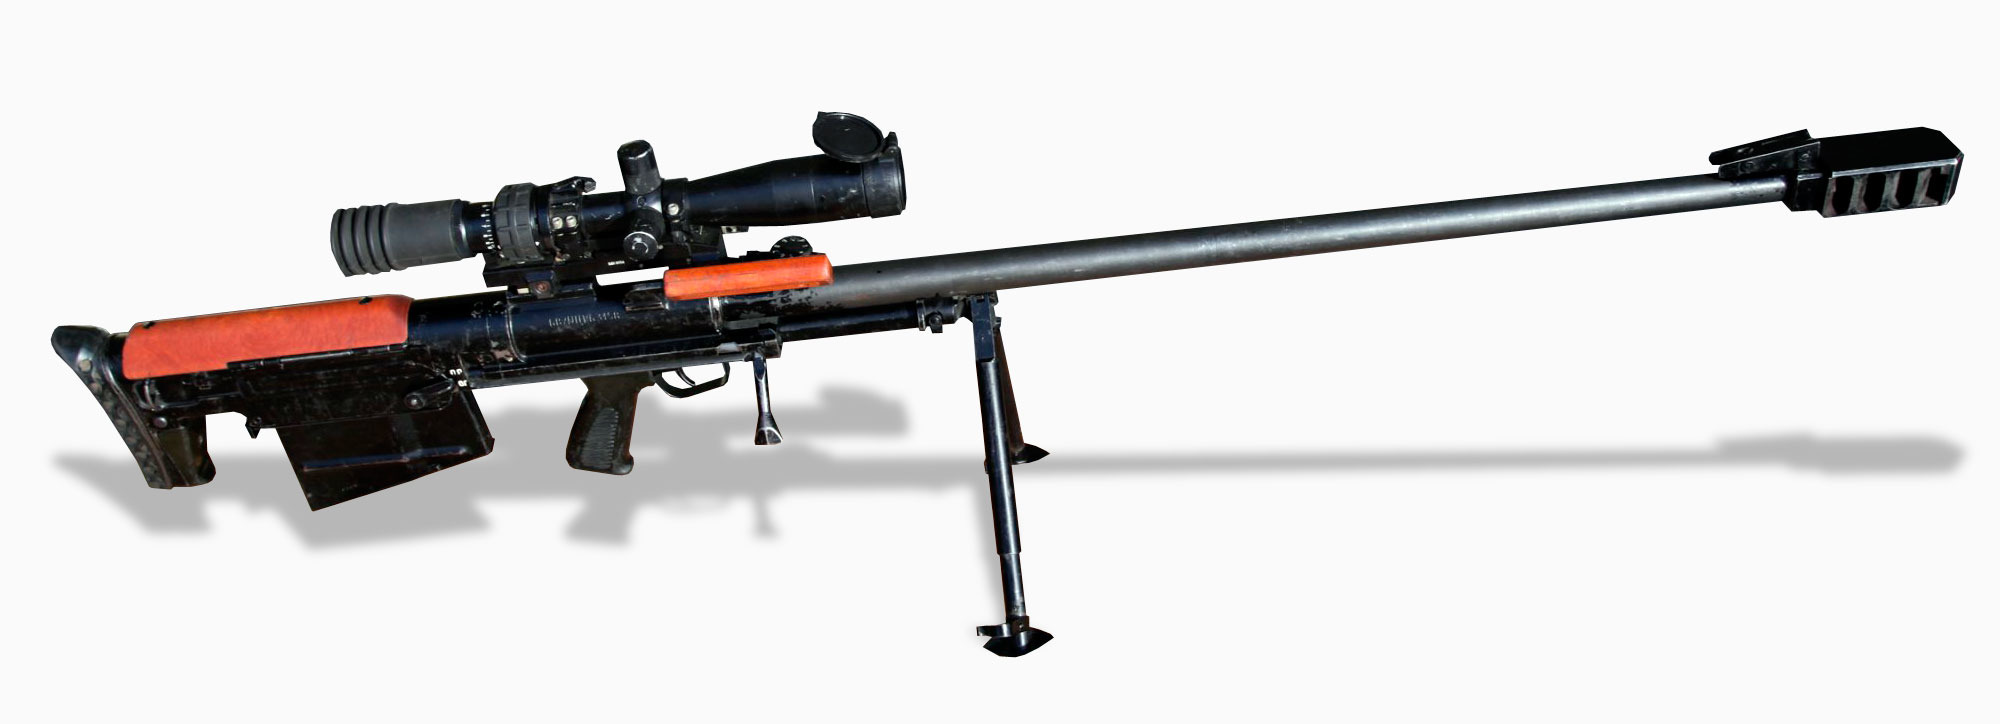 ASVK large caliber sniper rifle 